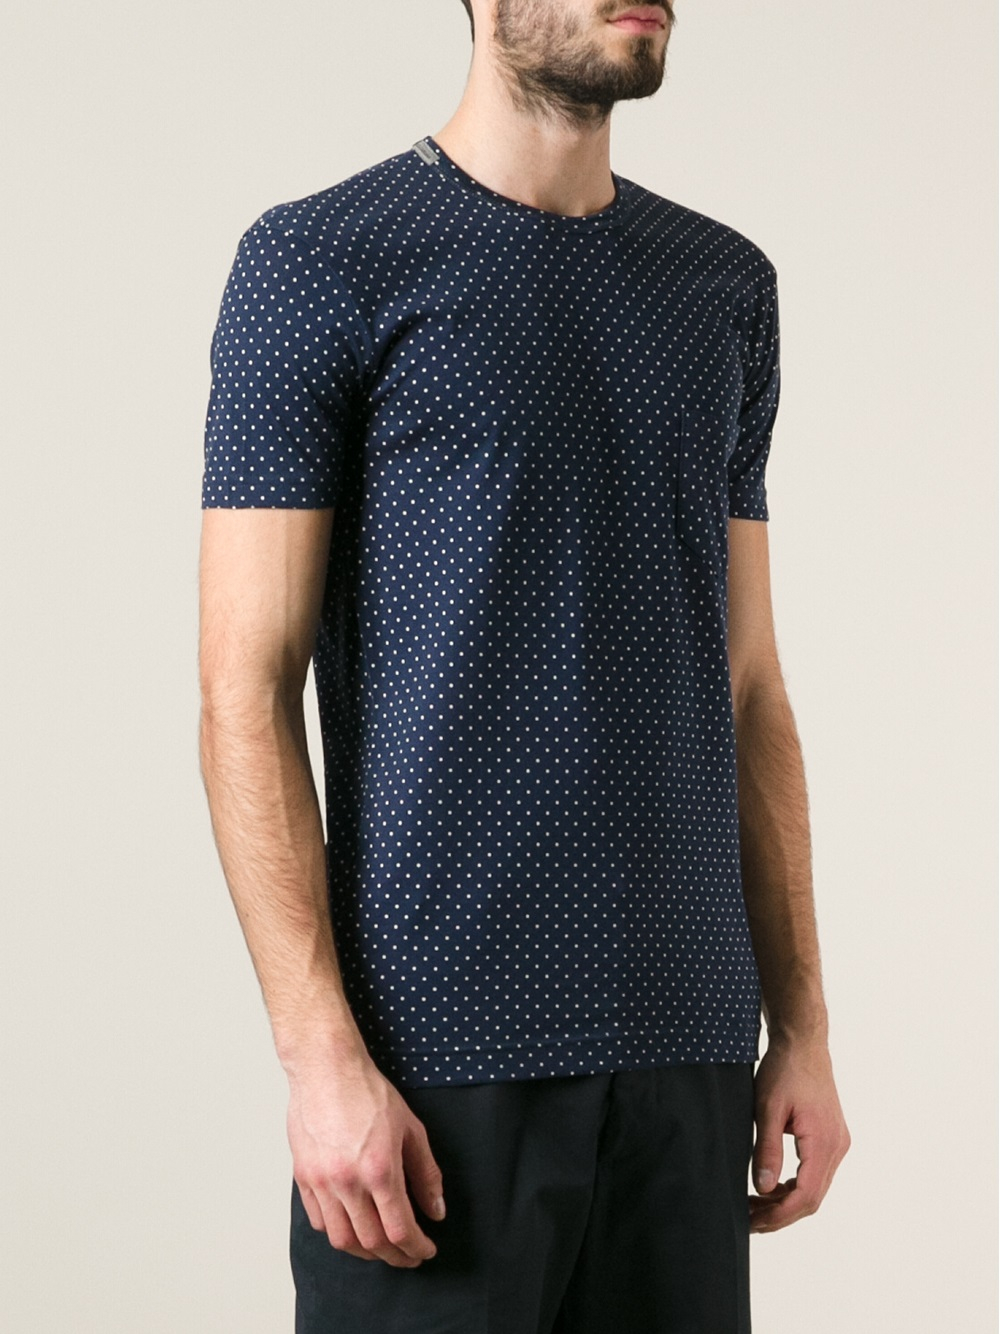 Lyst - Dolce & Gabbana Polka Dot Tshirt in Blue for Men